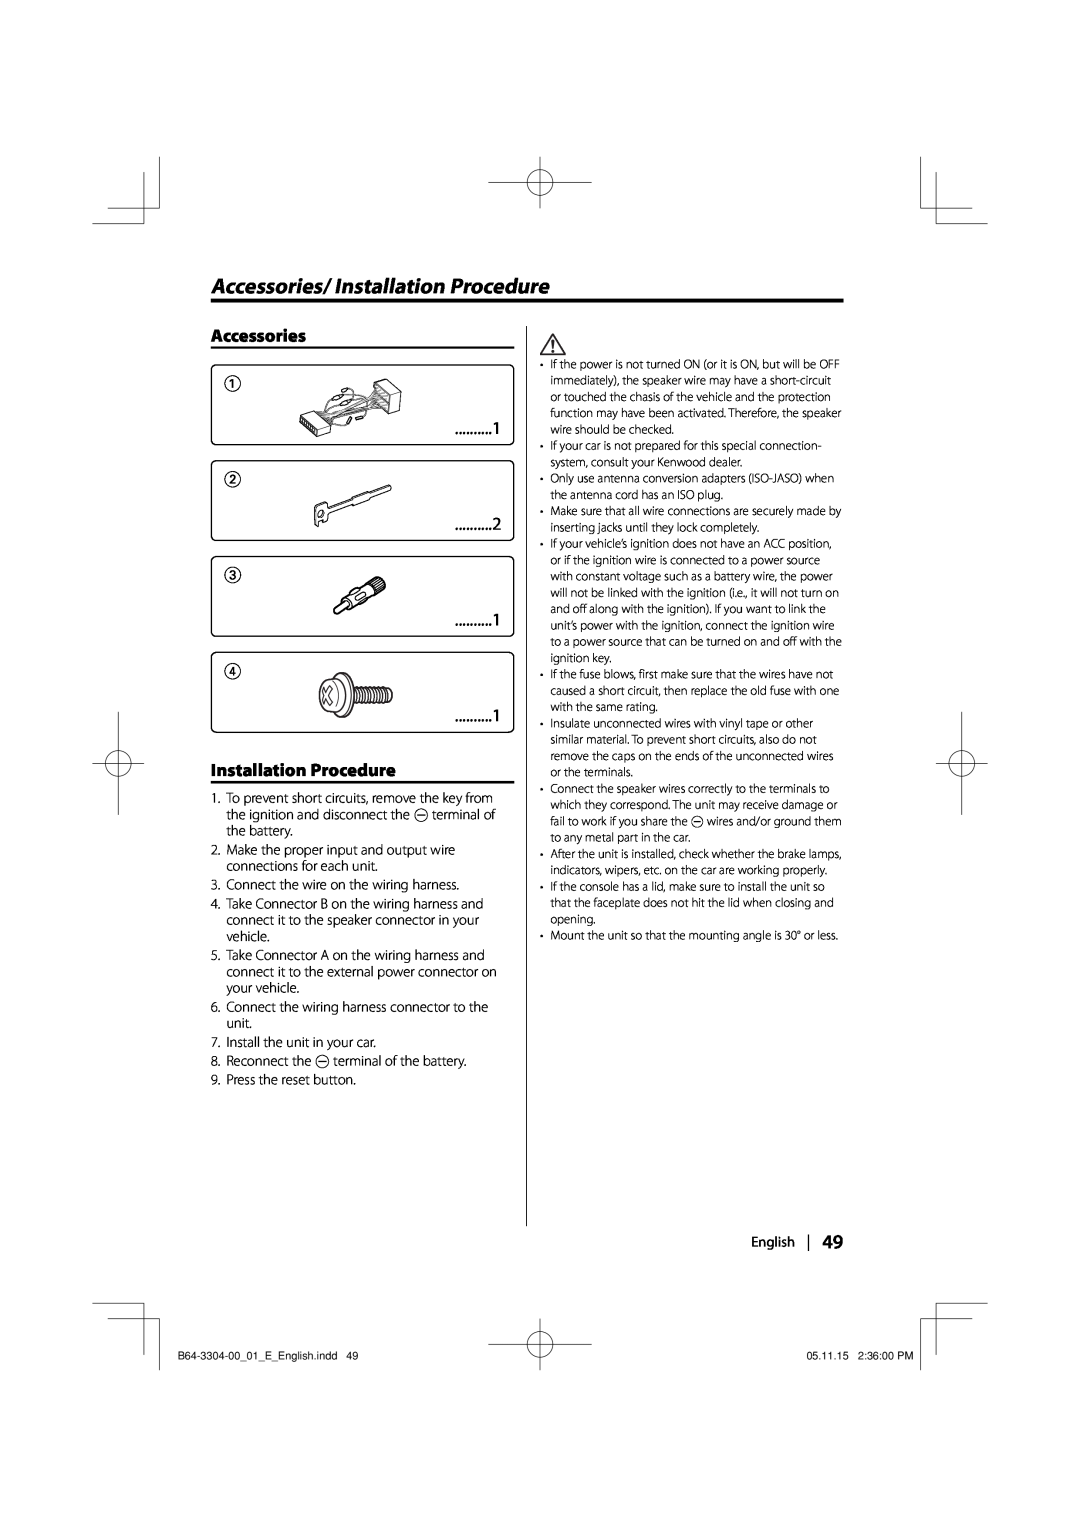 Dolby Laboratories KDC-W8534 instruction manual Accessories/ Installation Procedure 